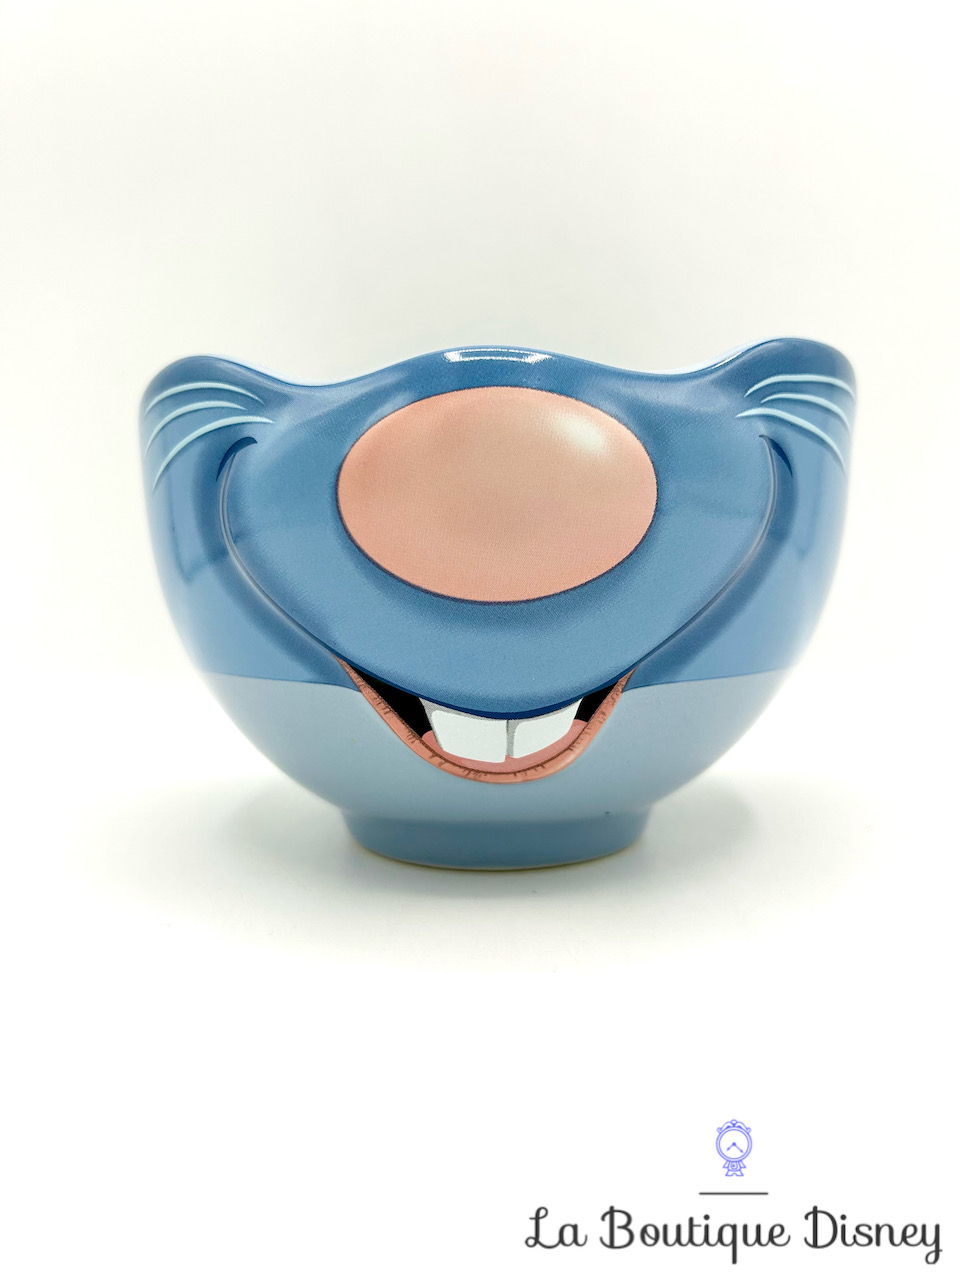 Bol Rémy sourire Disneyland Paris 2020 mug Disney Ratatouille dents bleu